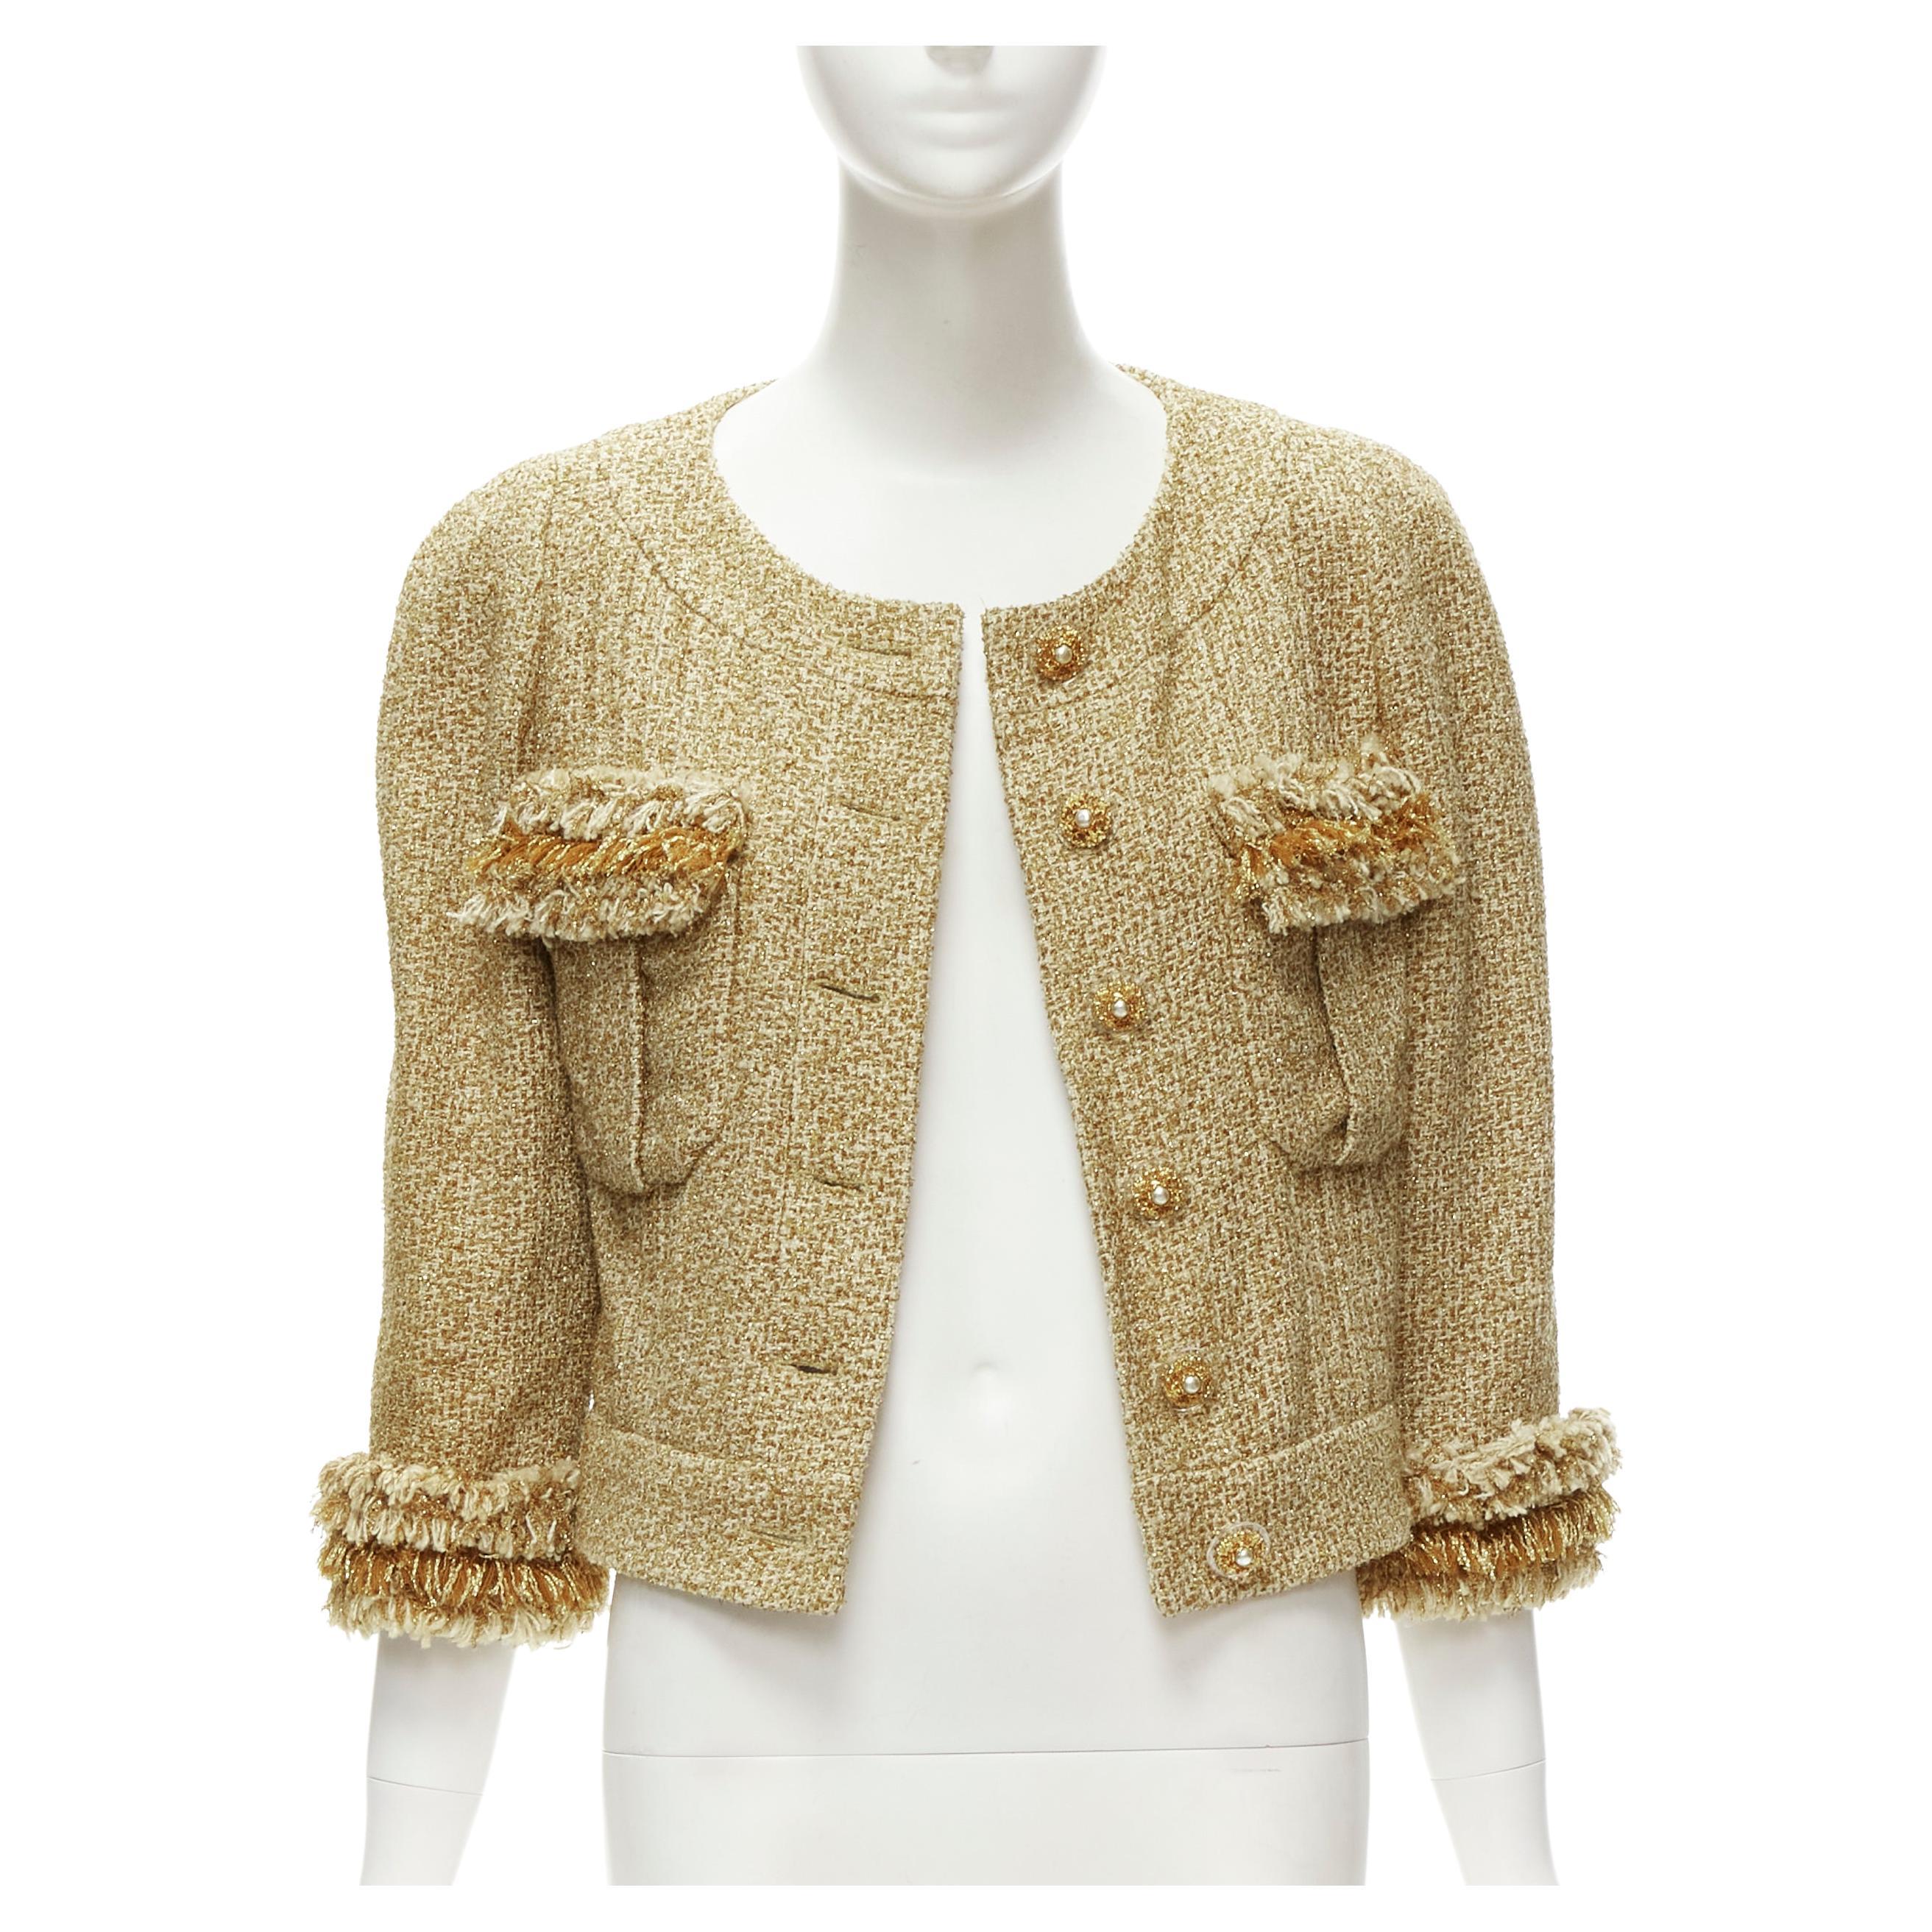 Chanel gold tweed skirt - Gem